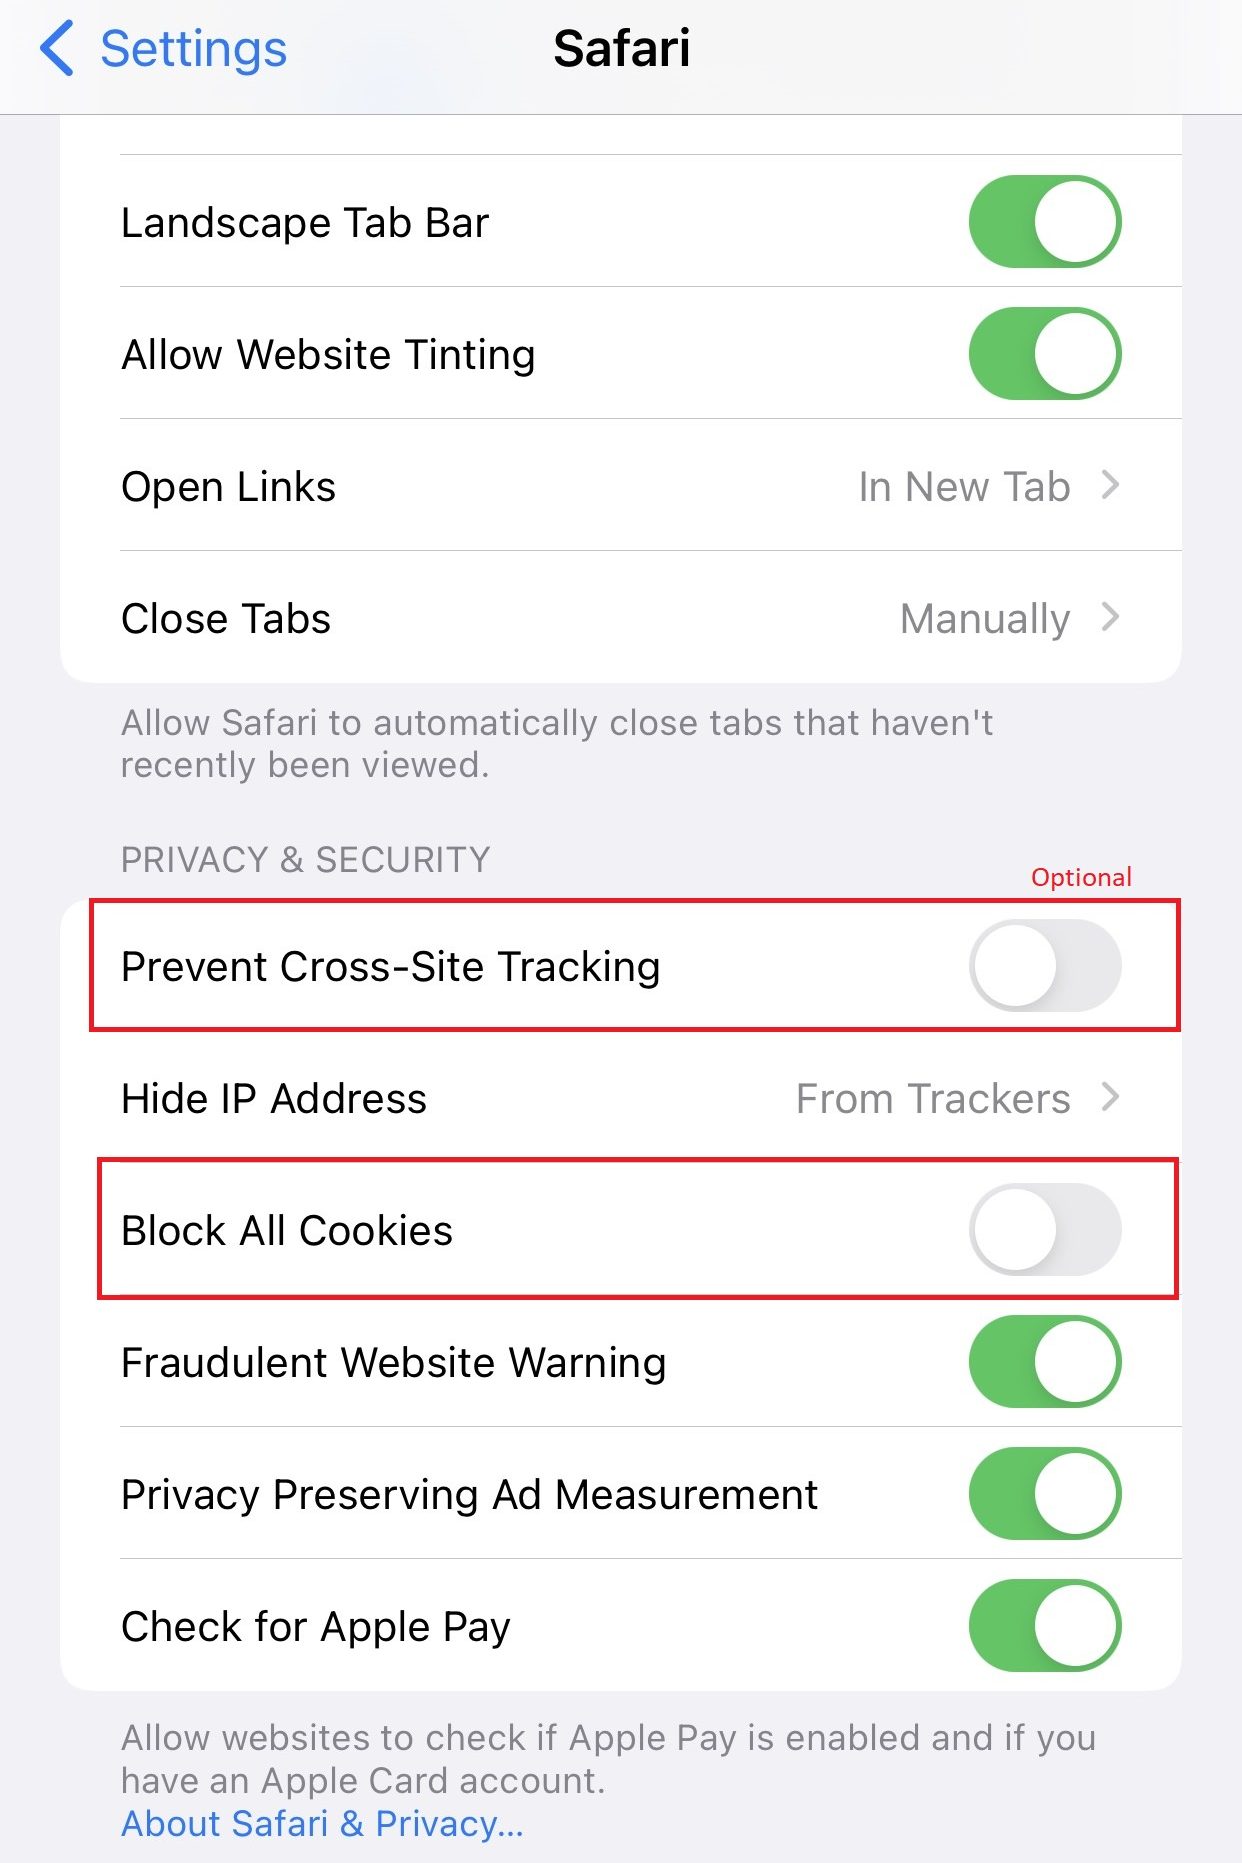 Turn off toggle near Block All Cookies to enable cookies on Safari